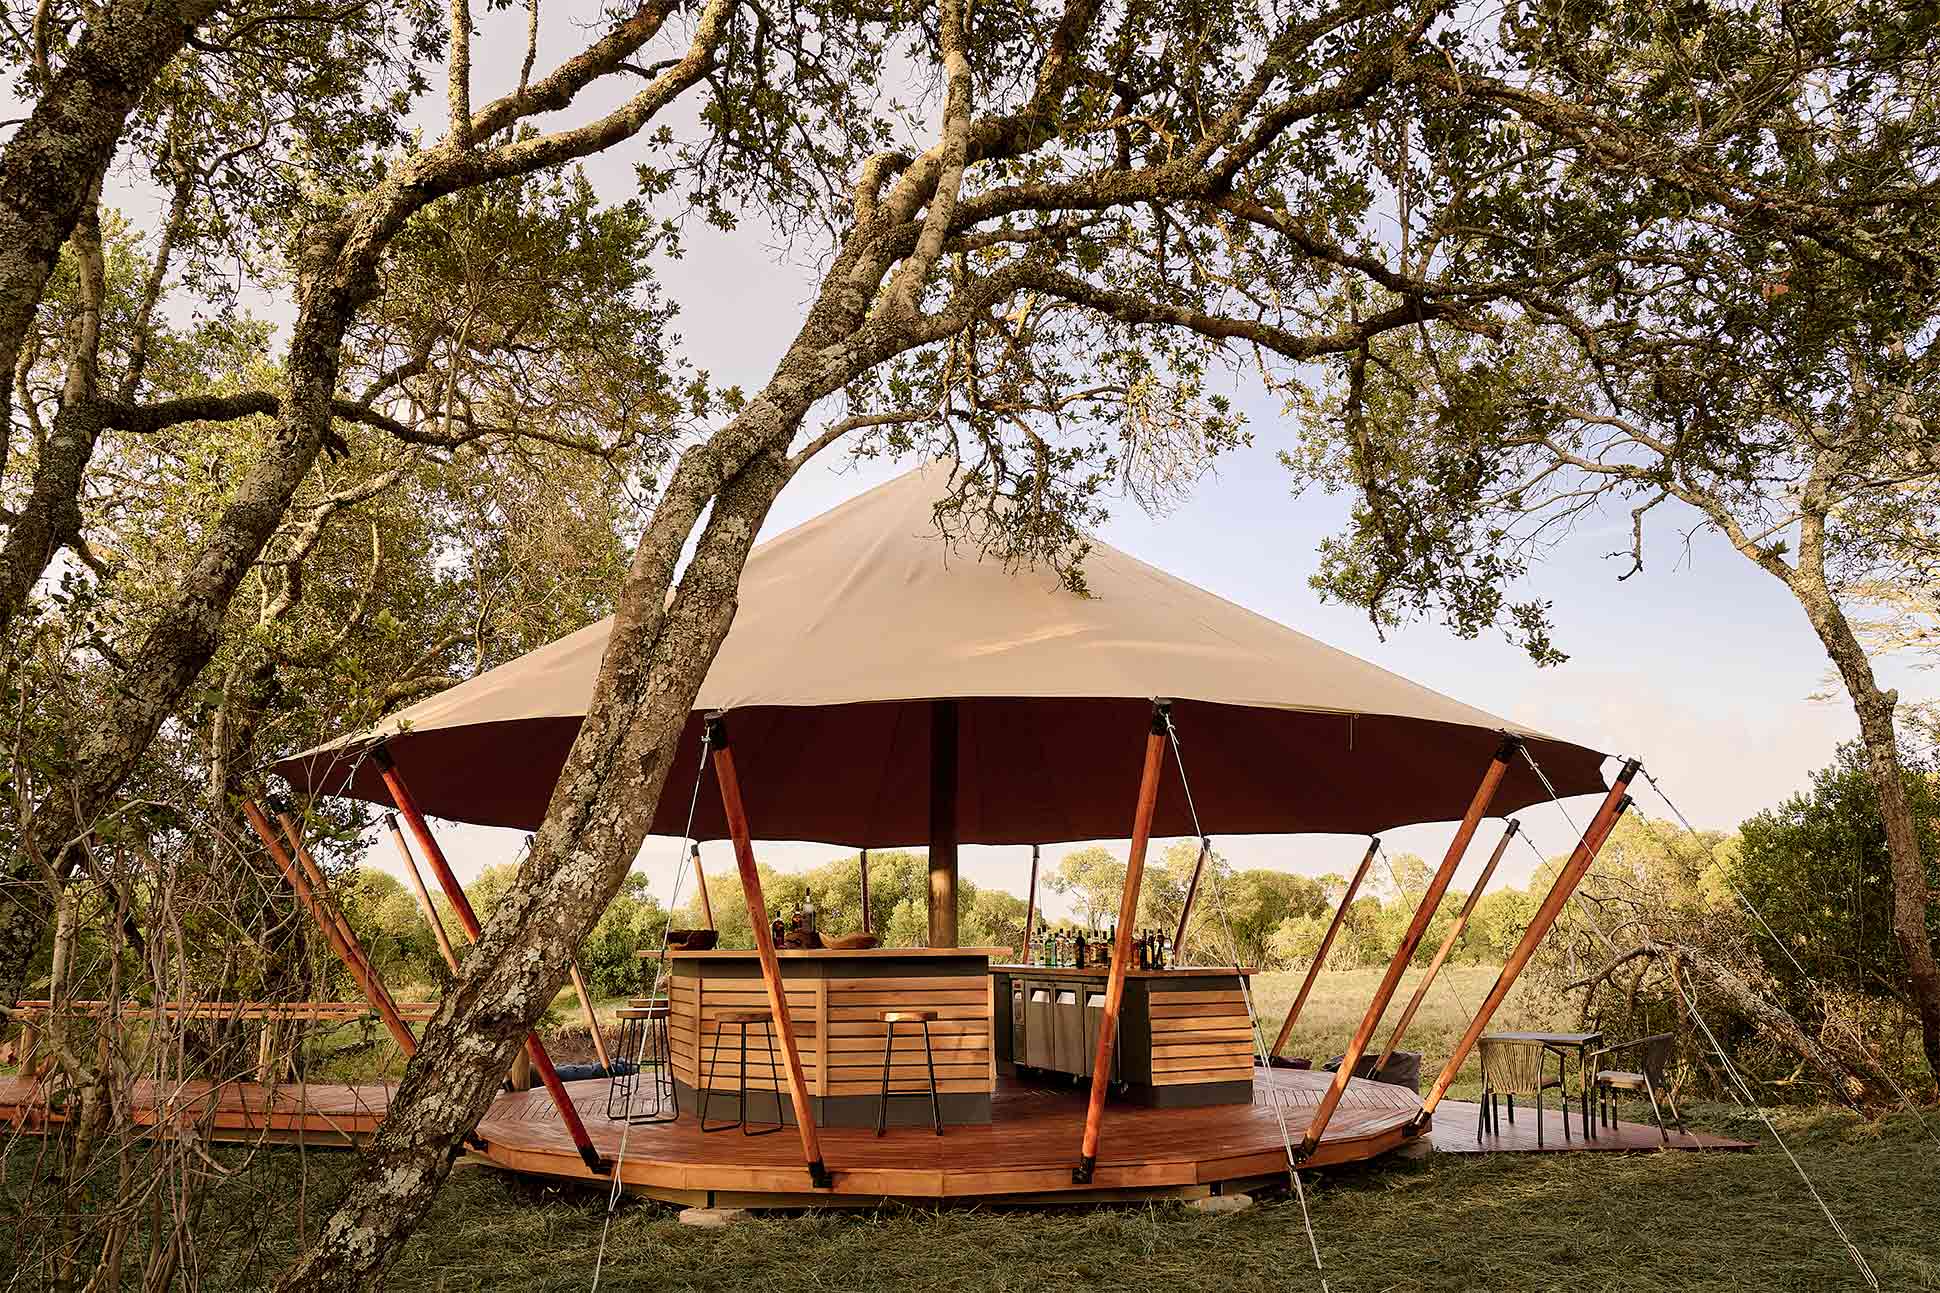 Boma bar tent at Sanctuary Tambarare, Ol Pejeta Conservancy, Kenya